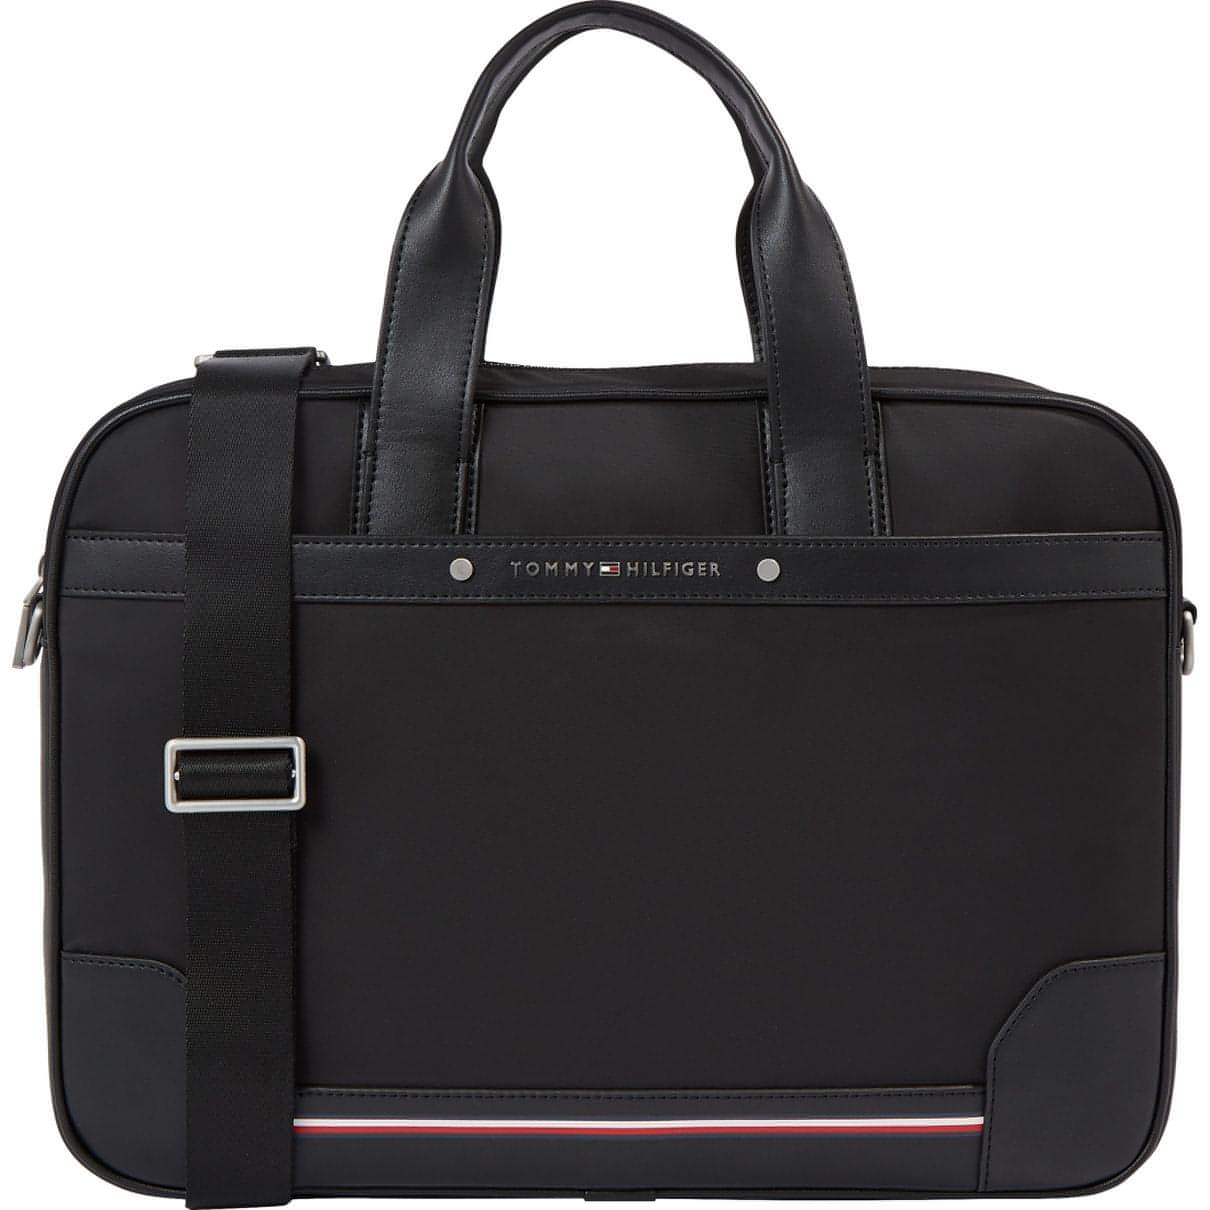 TOMMY HILFIGER vyriškas juodas nešiojamojo kompiuterio krepšys Central repreve computer bag